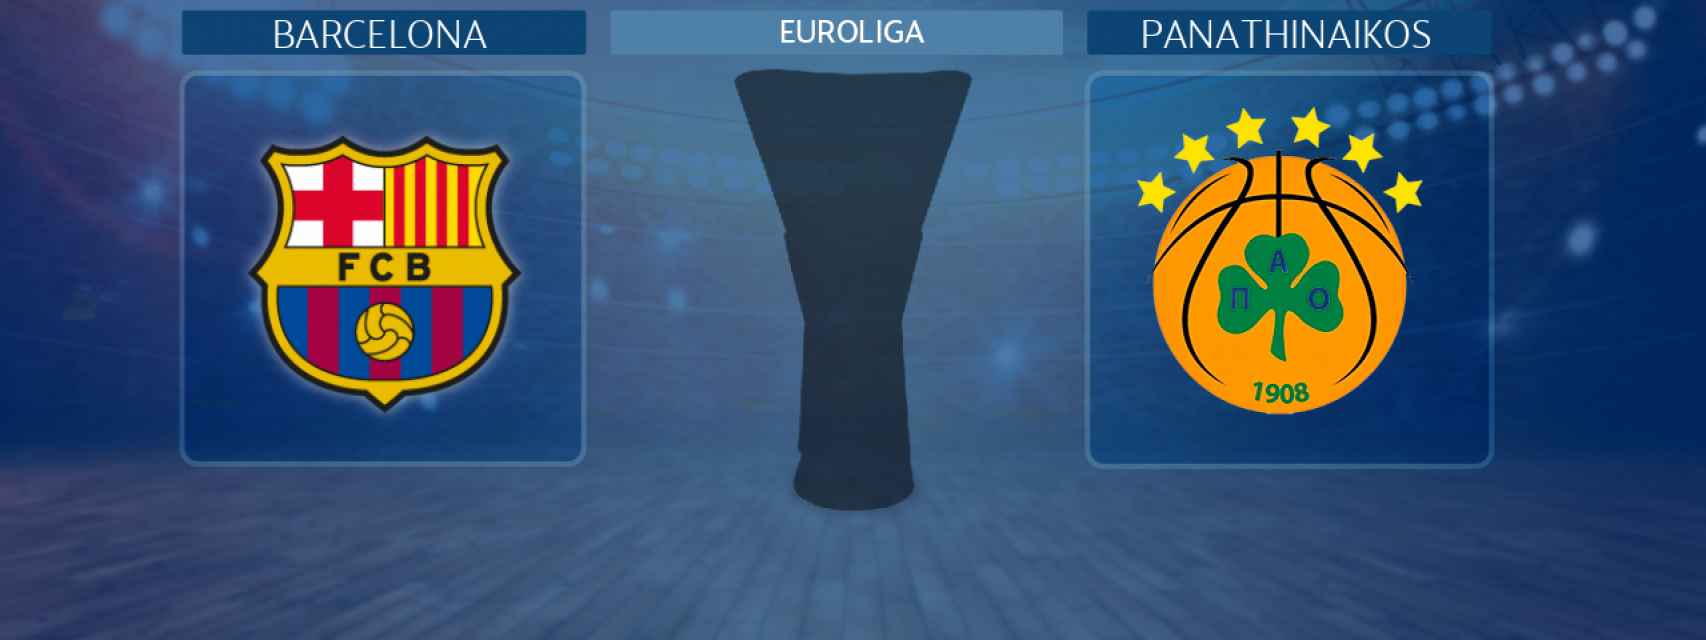 Barcelona - Panathinaikos, partido de la Euroliga